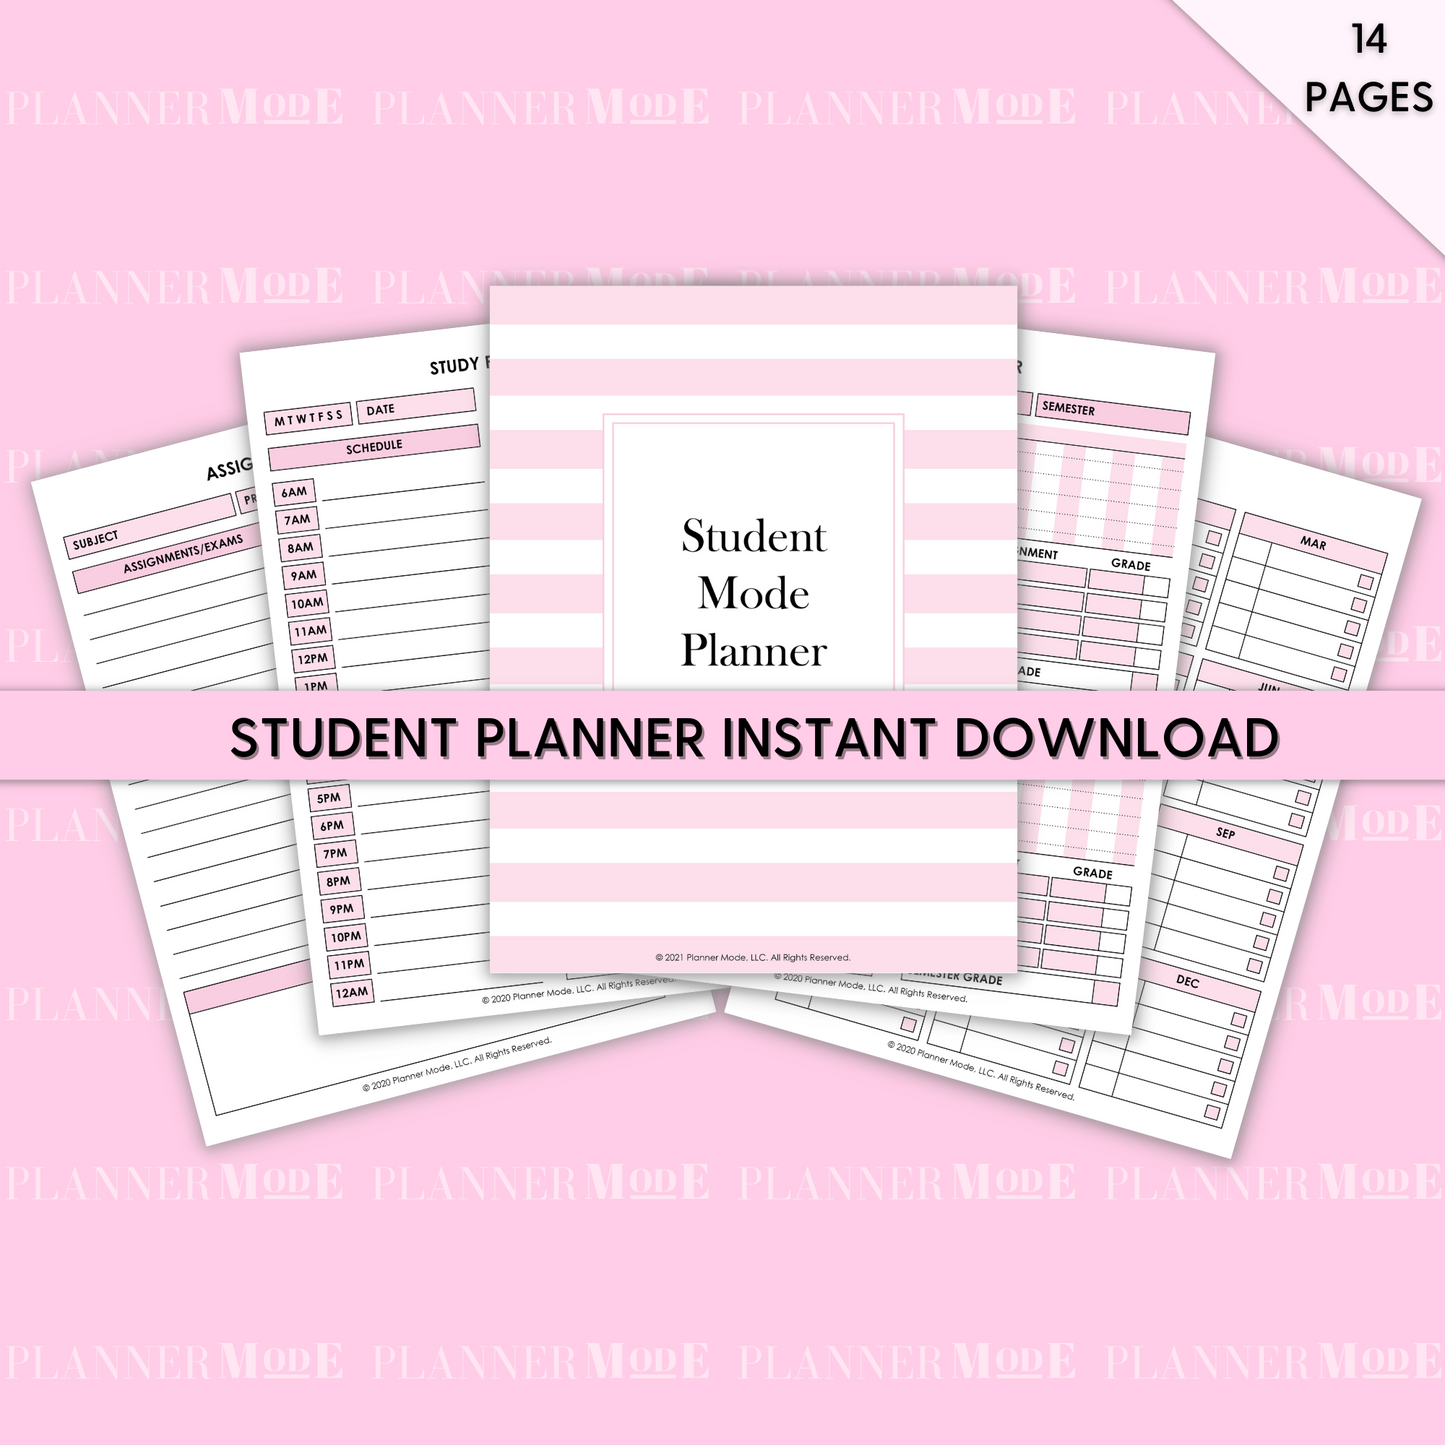 Student Mode Planner